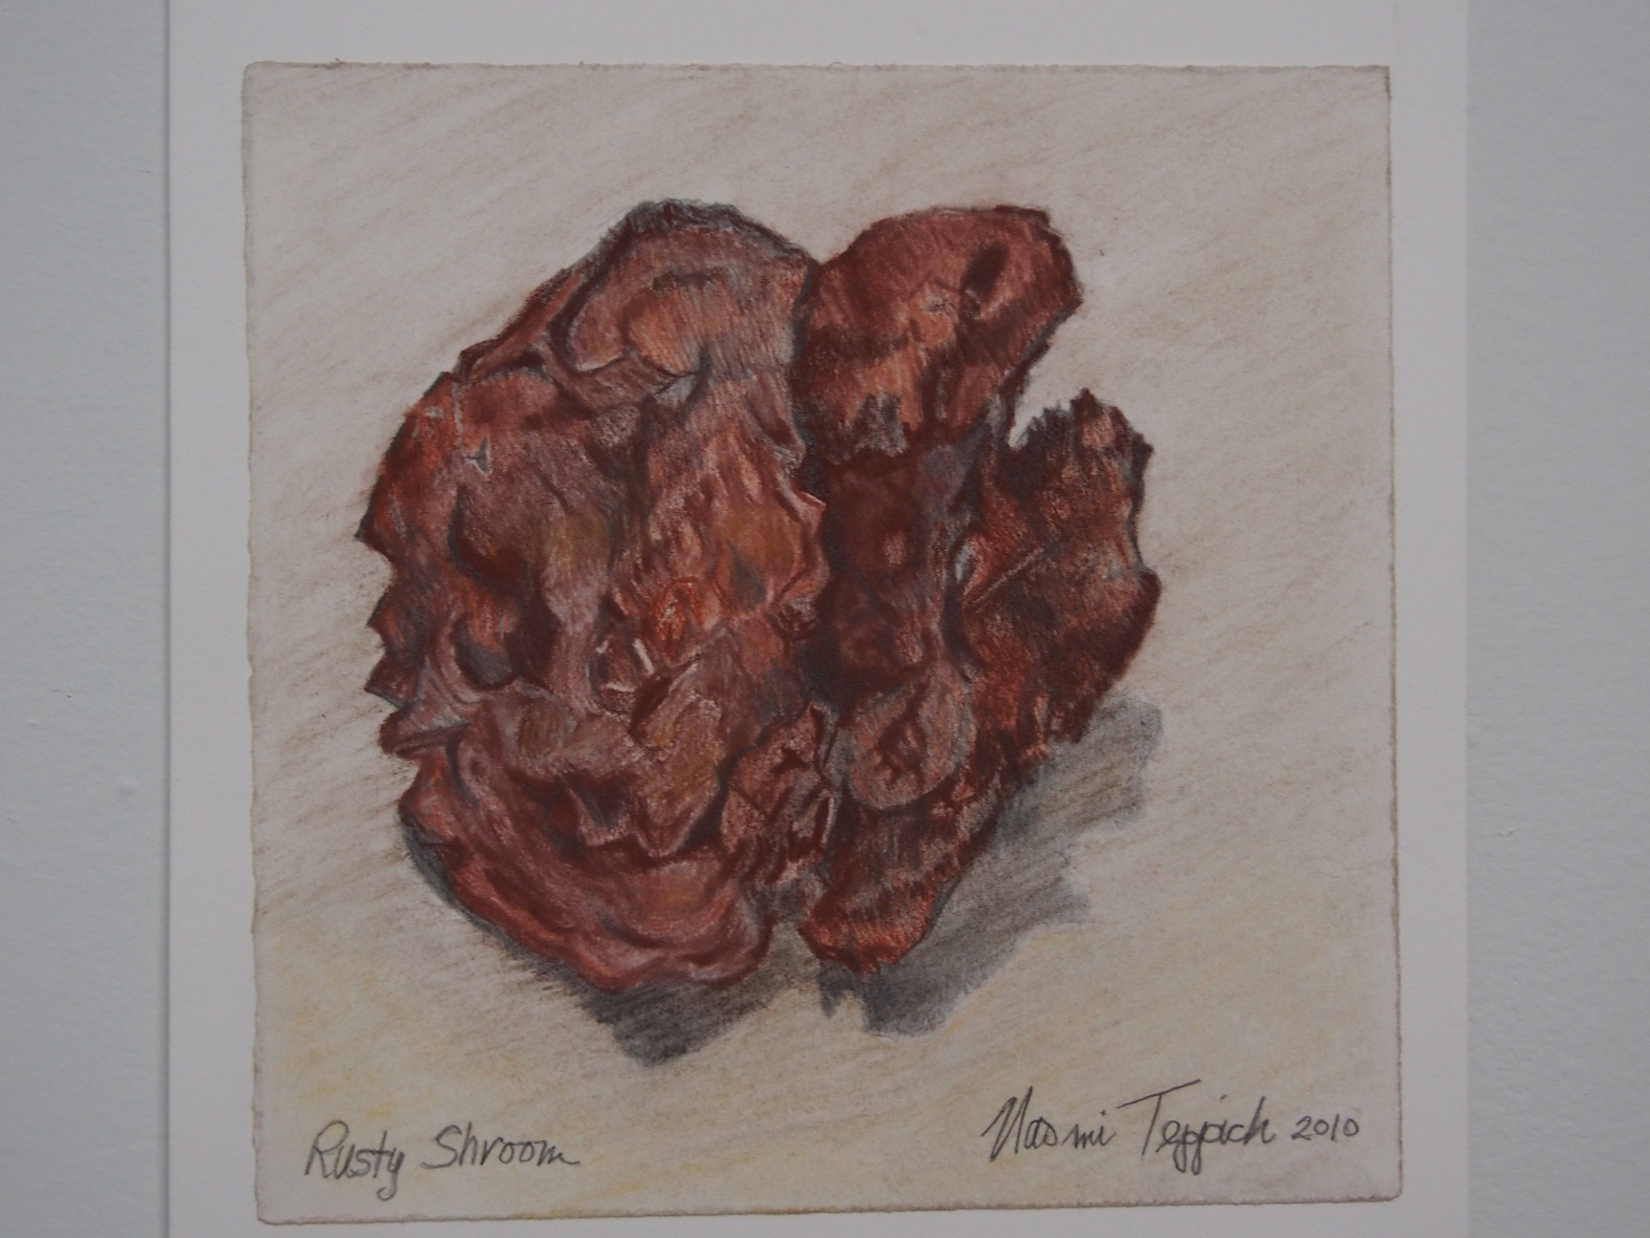 Rusty Shroom  2010 (sold)